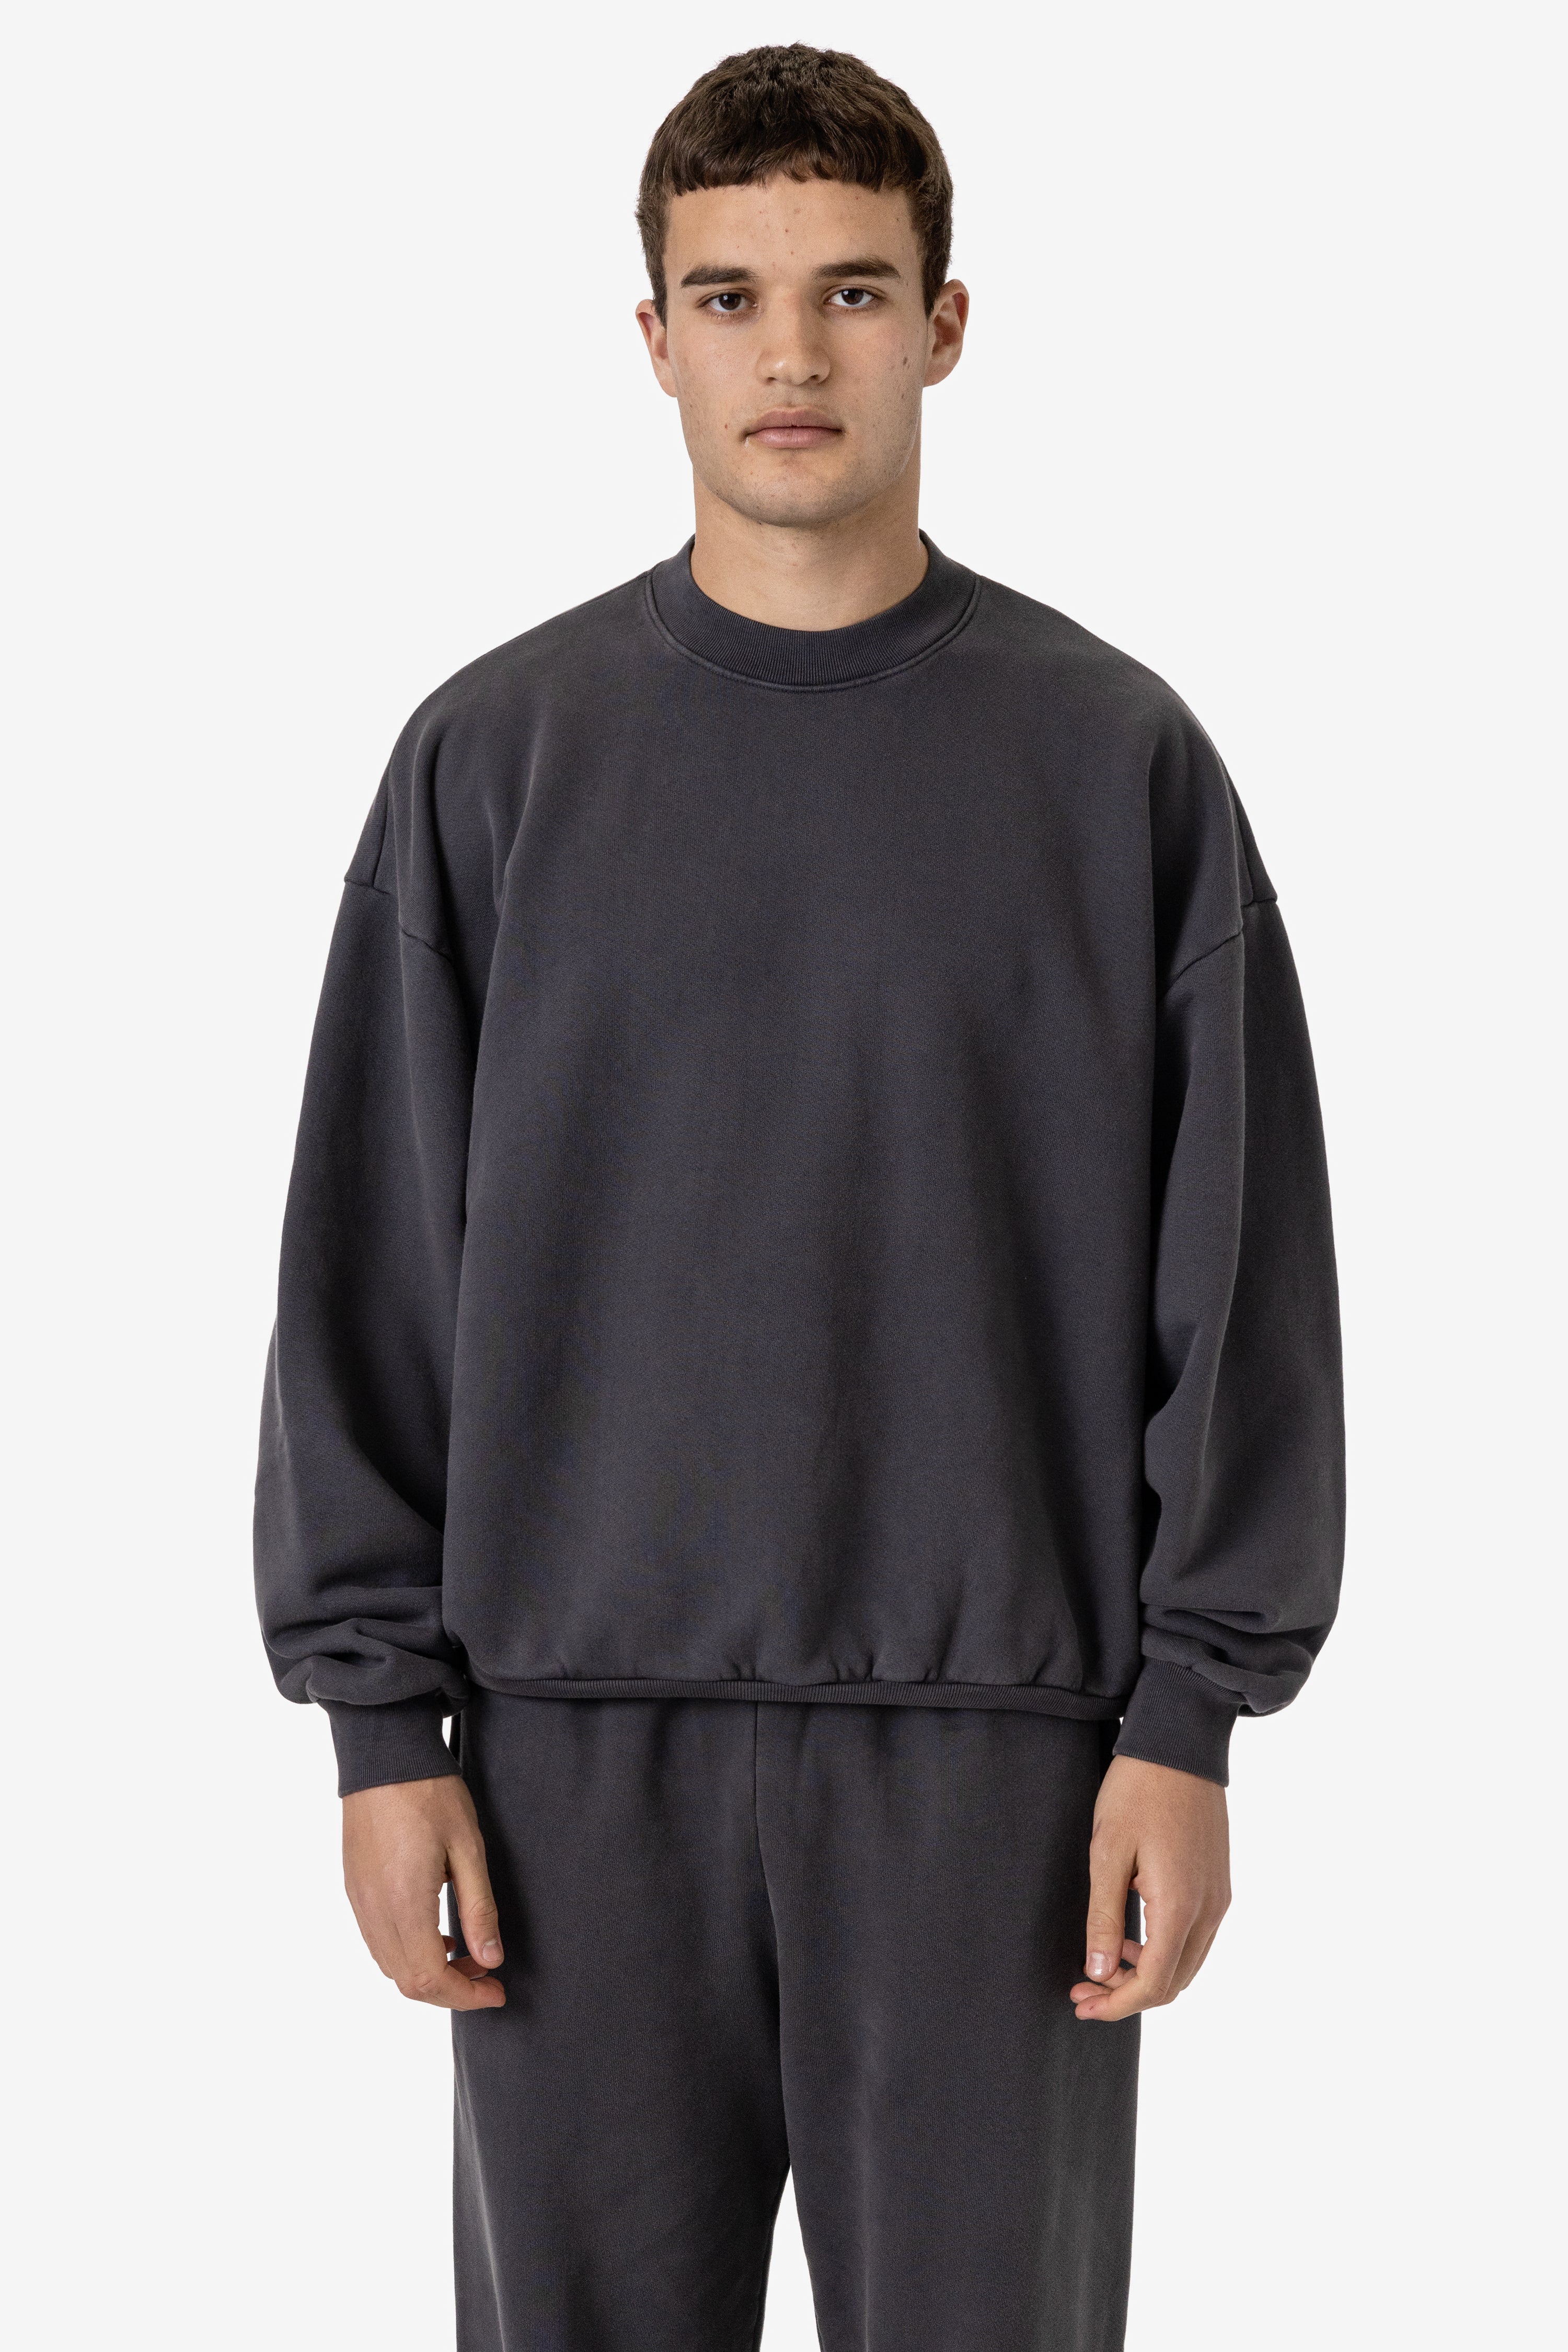 PLU07GD - 16oz. Garment Dye Plush Fleece Pullover Crewneck Sweatshirt